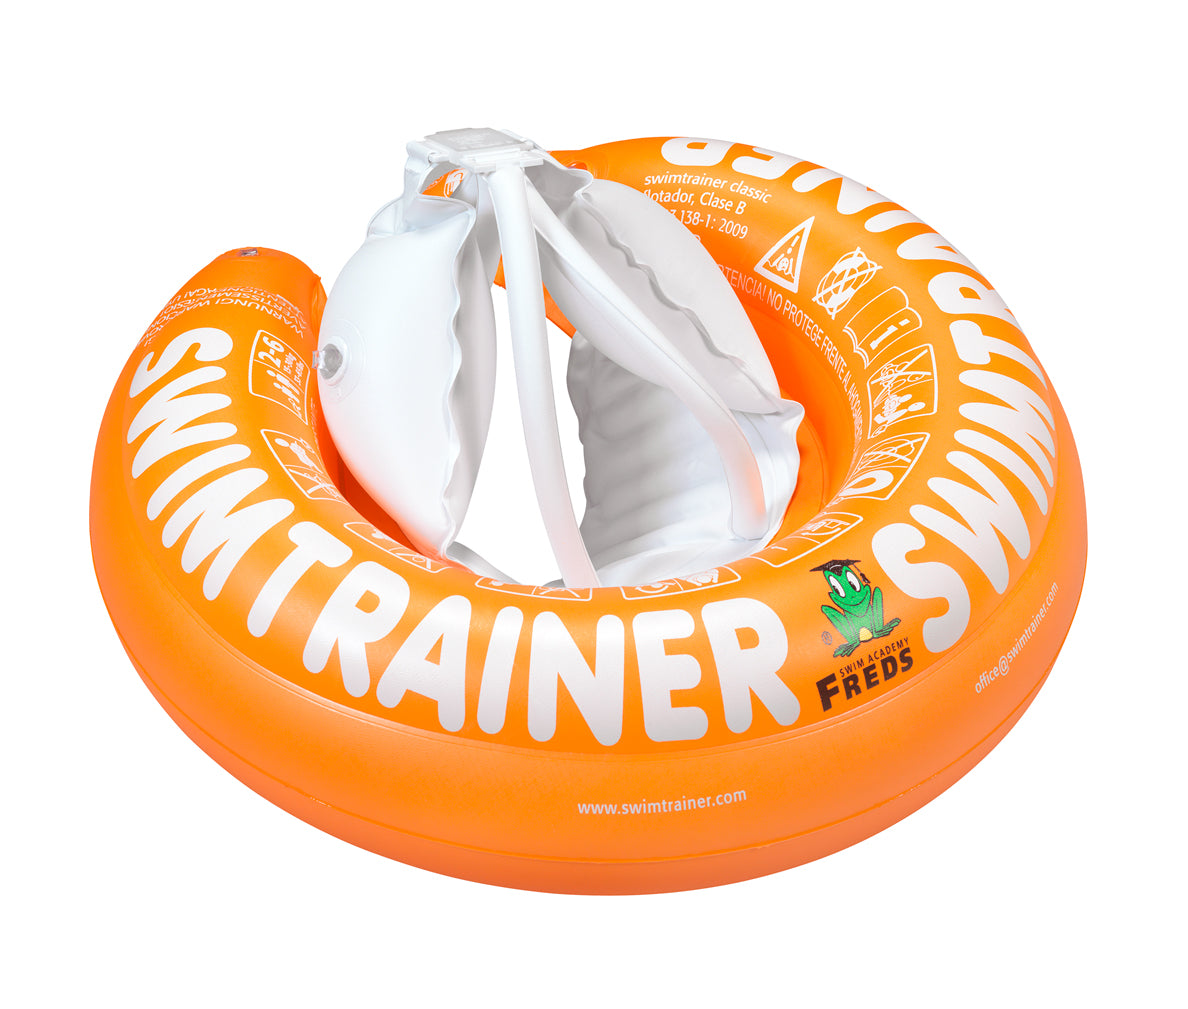 Freds Swimtrainer Classic Orange (2 - 6 YEARS) (15-30KG)